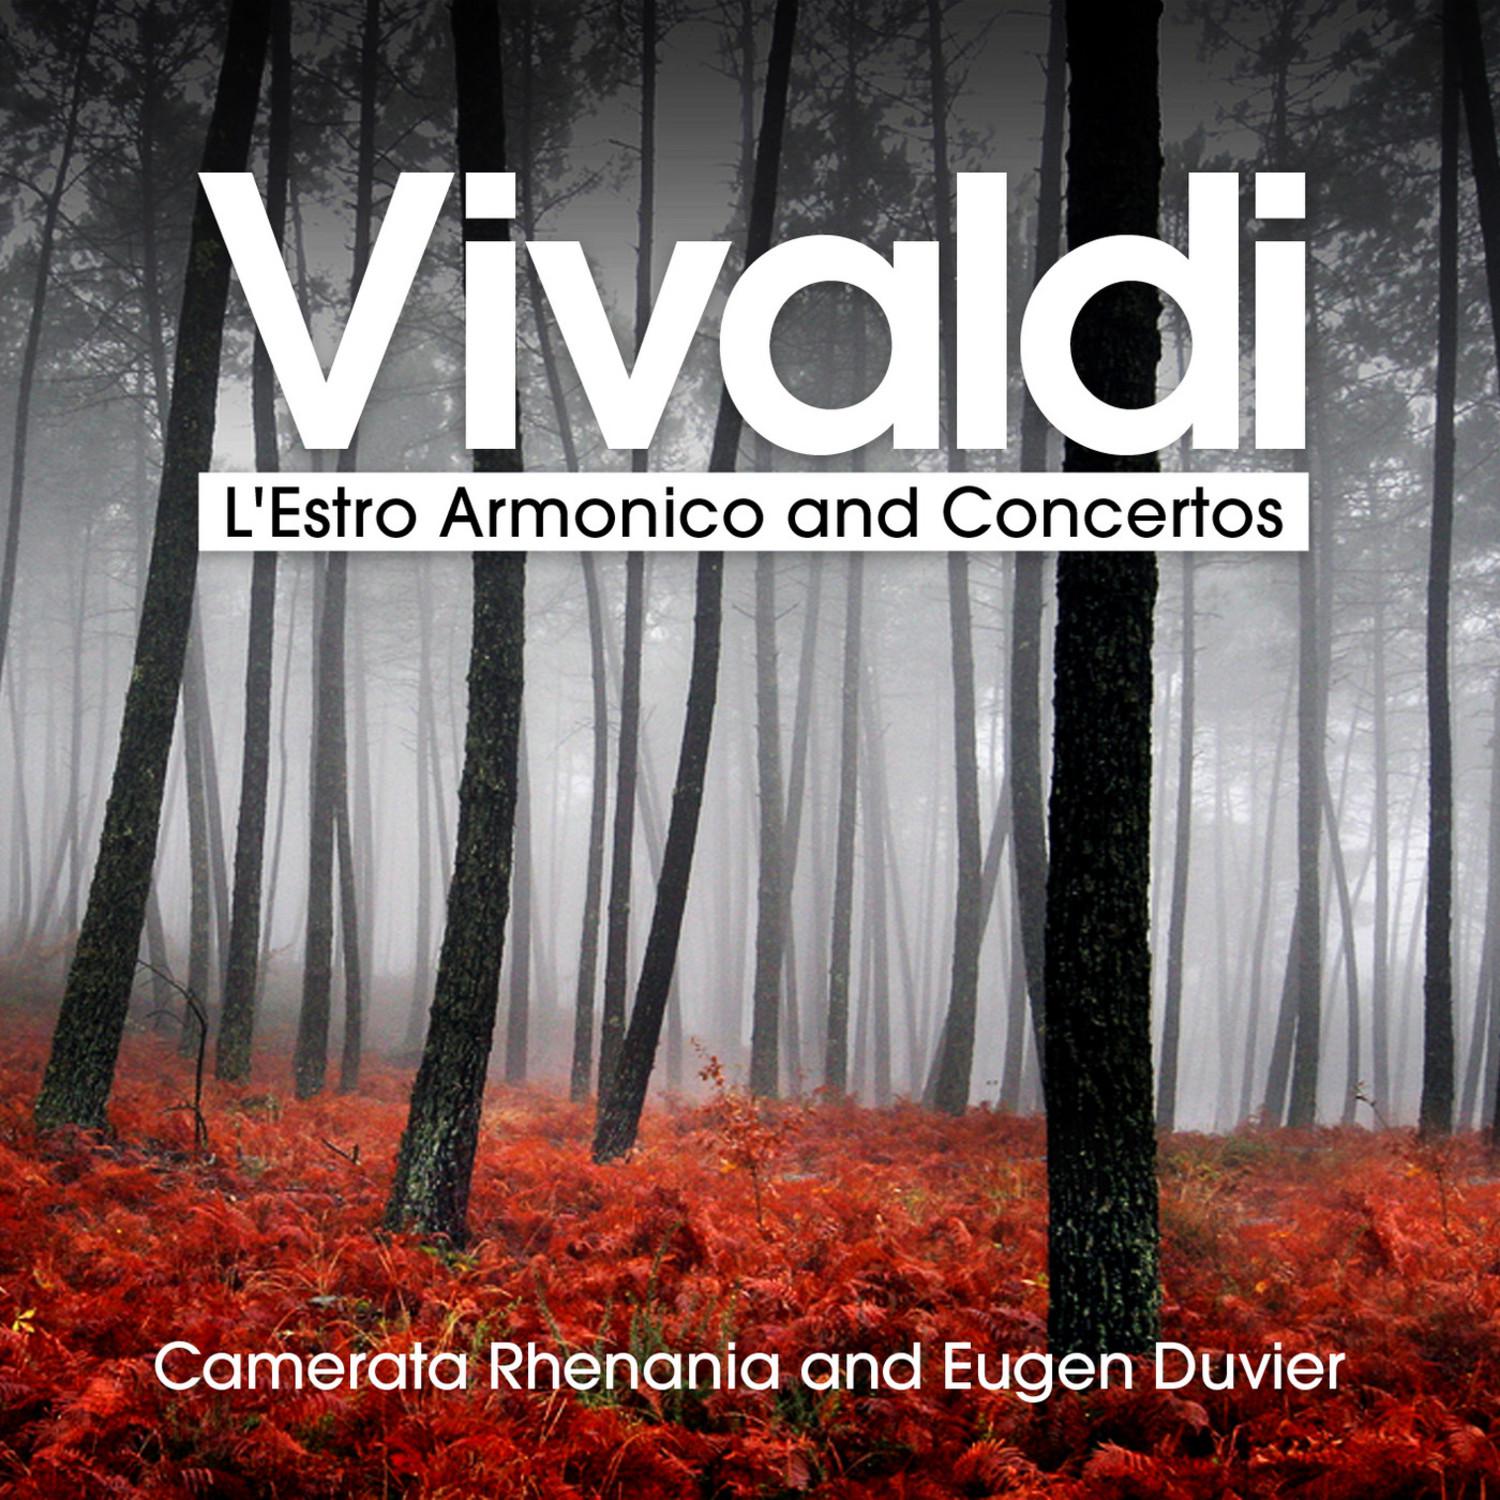 L'Estro Armonico, Op. 3 - Concerto No. 7 in F Major for 4 Violins, Cello and Strings, RV 567: I. Andante